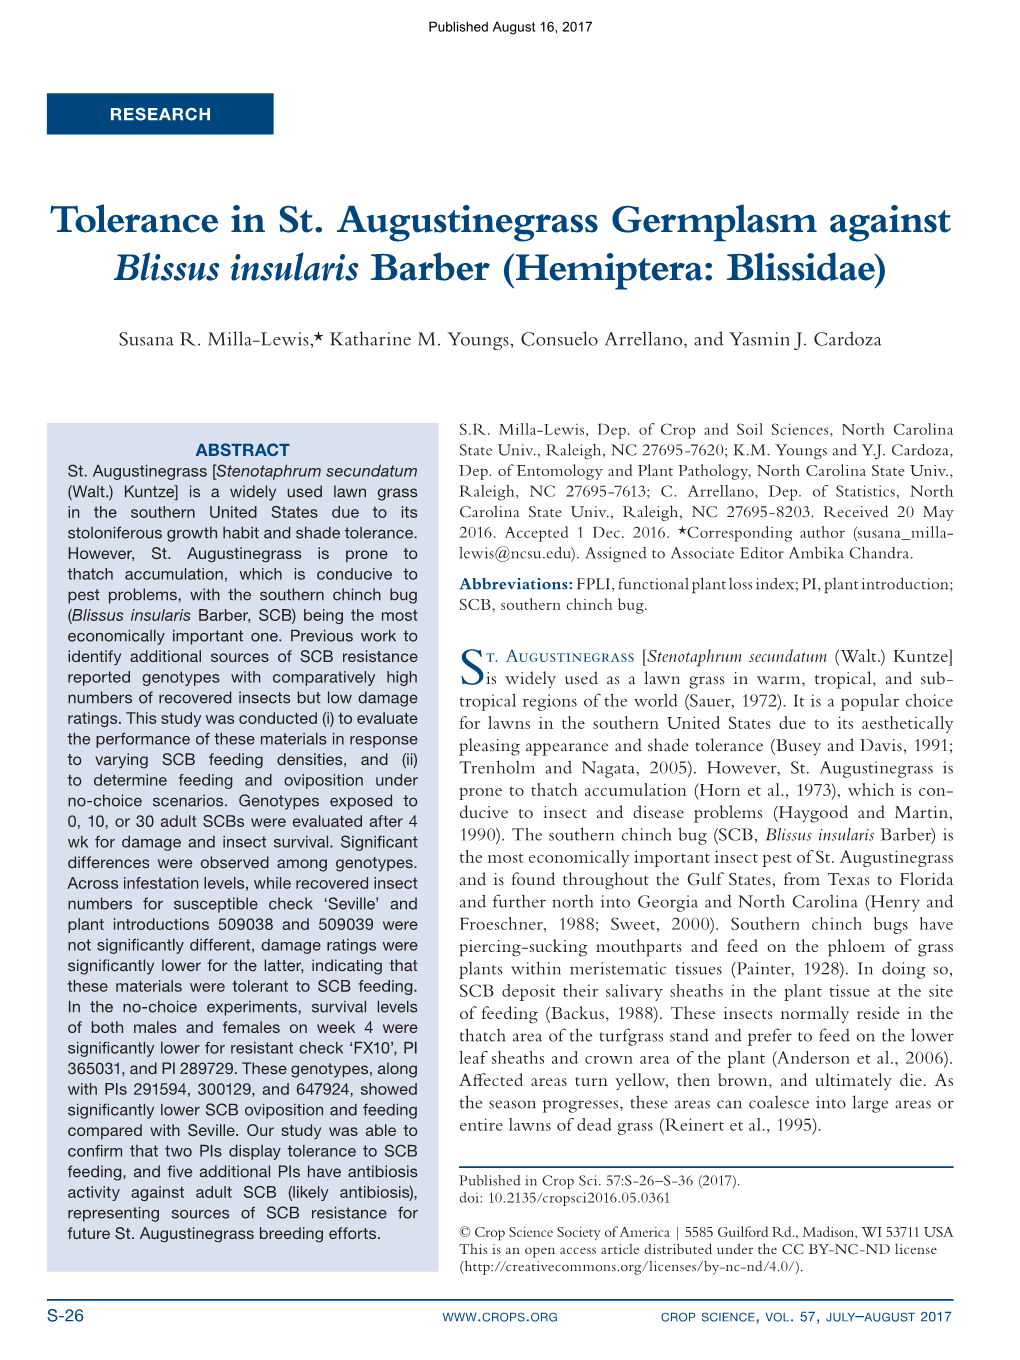 Tolerance in St. Augustinegrass Germplasm Against Blissus Insularis Barber (Hemiptera: Blissidae)